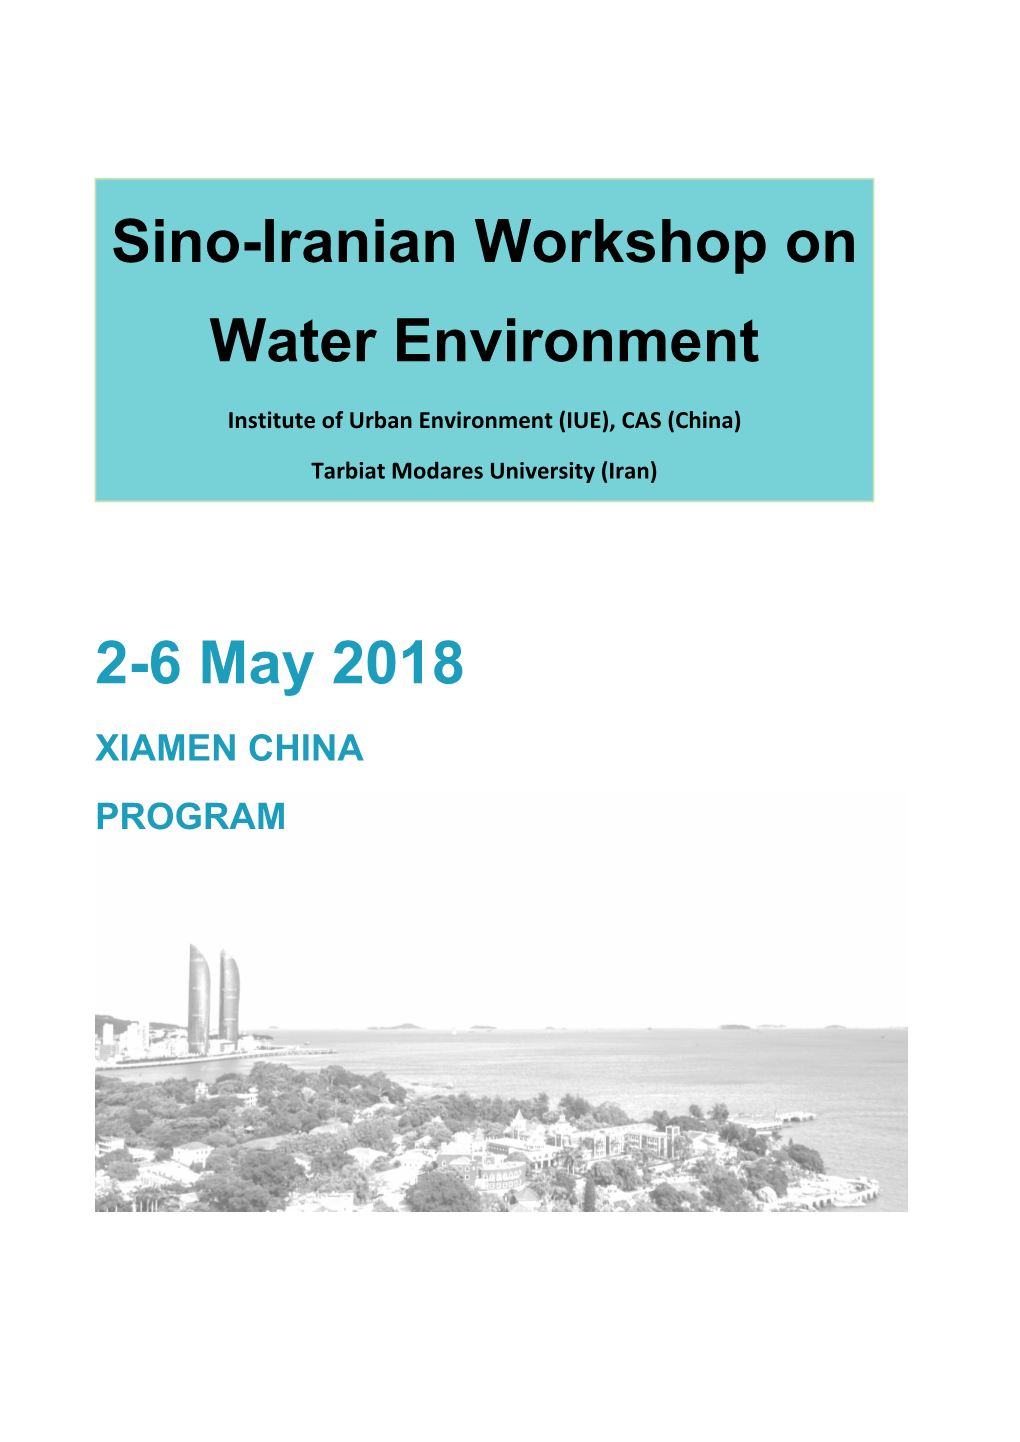 2-6 May 2018 Sino-Iranian Workshop on Water Environment